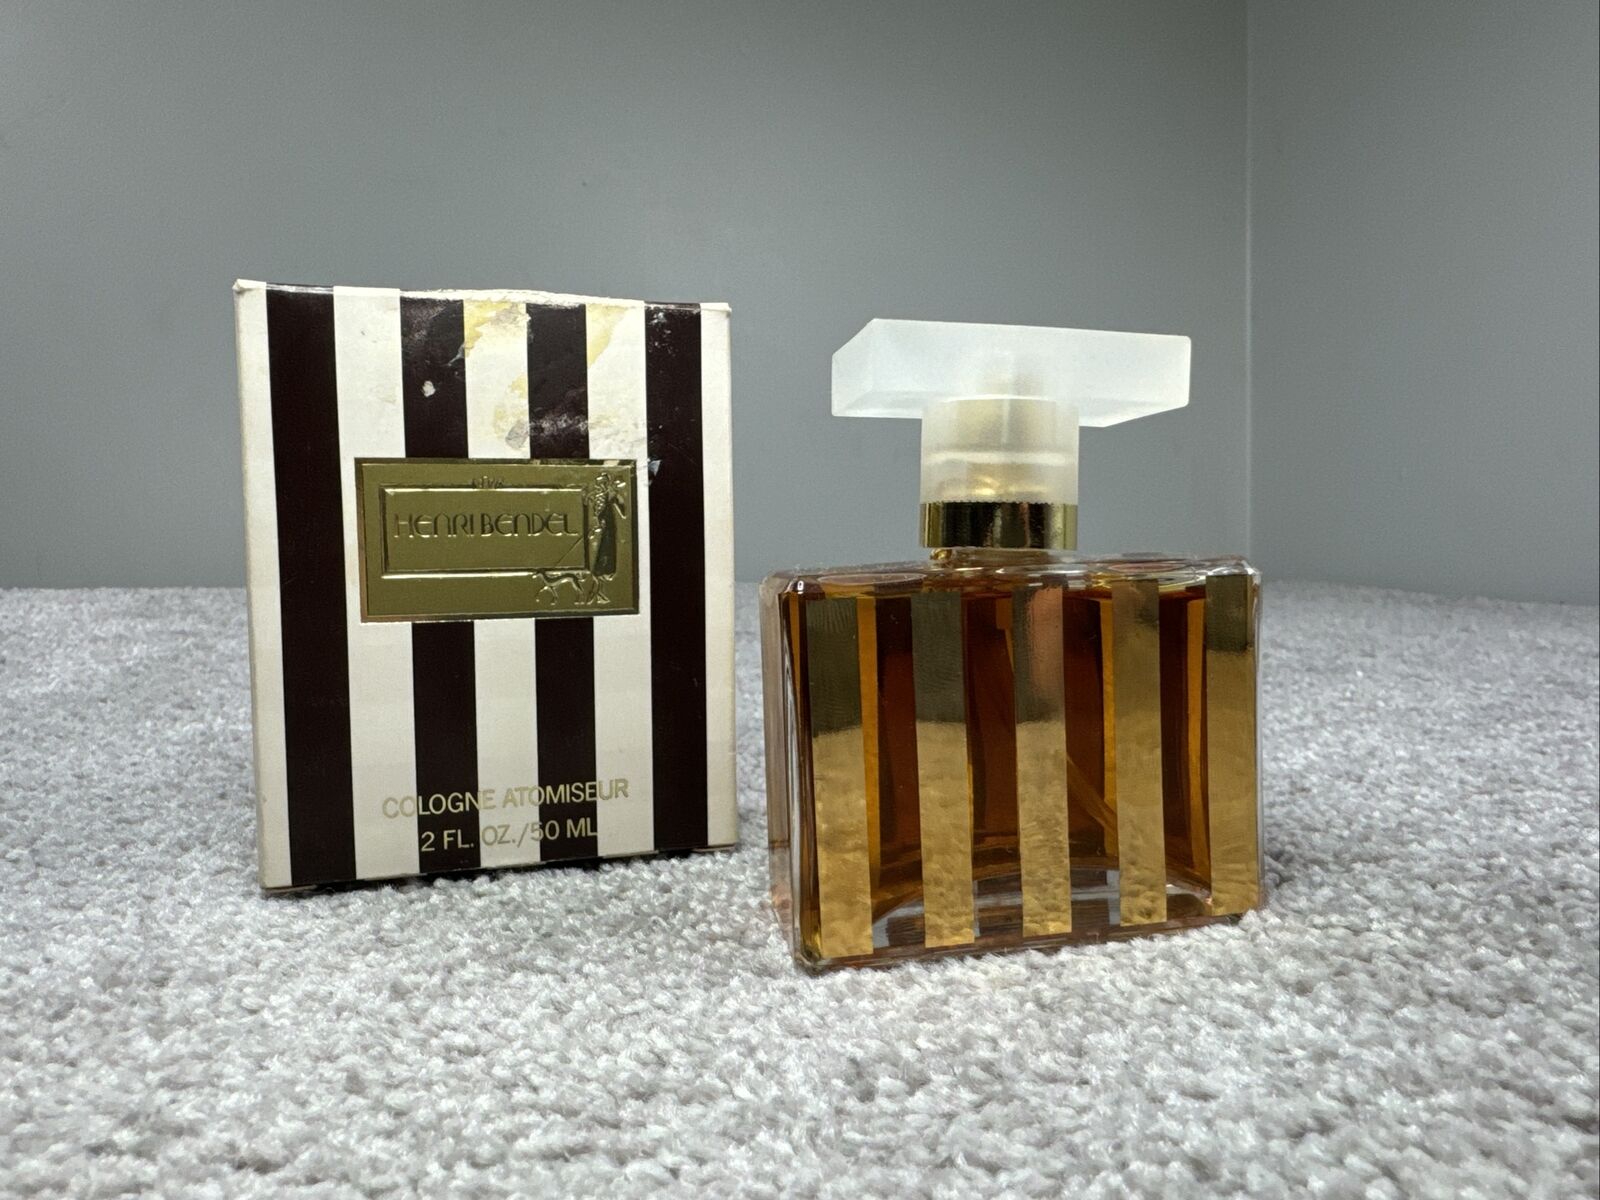 Vintage Henri Bendel Cologne Atomiseur 2 oz. Spray Vintage Perfume New York